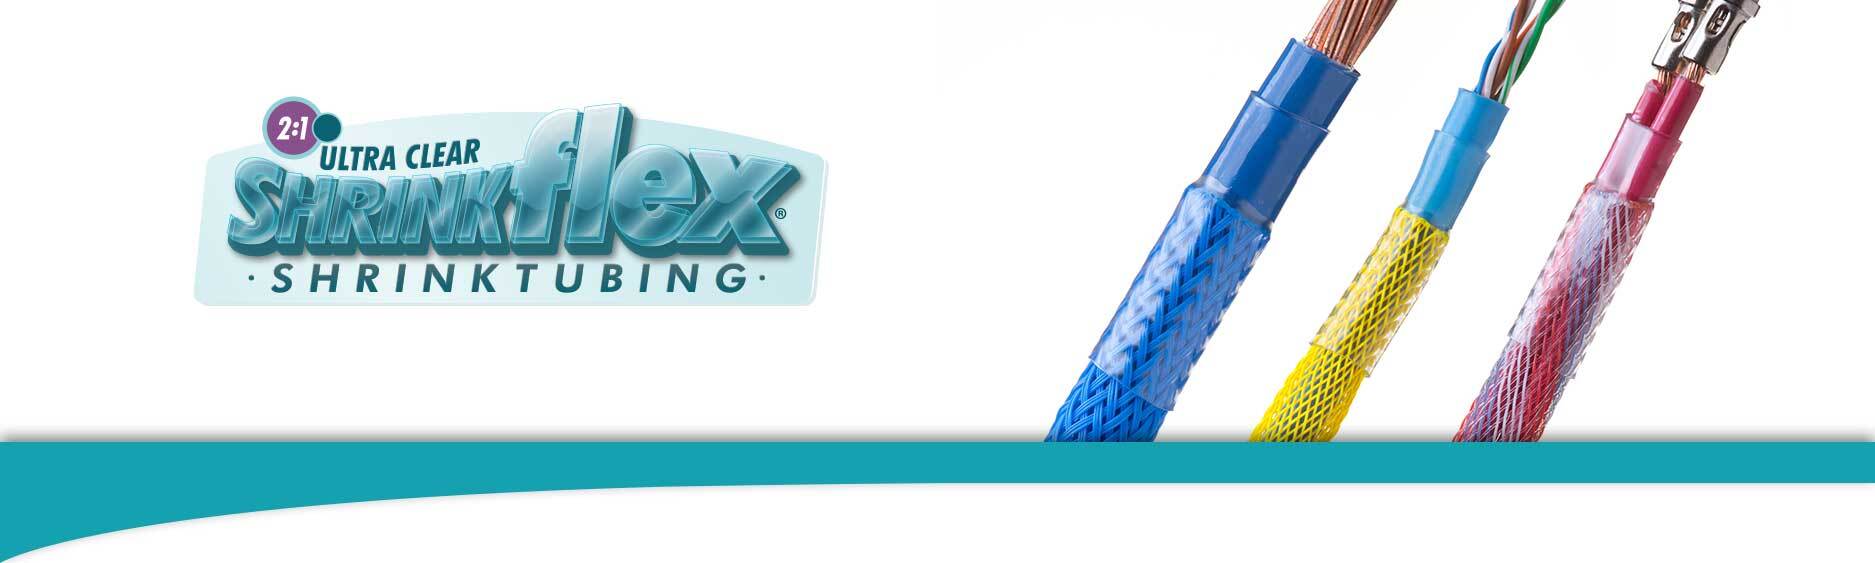 Shrinkflex® 2:1 Ultra Clear PVC